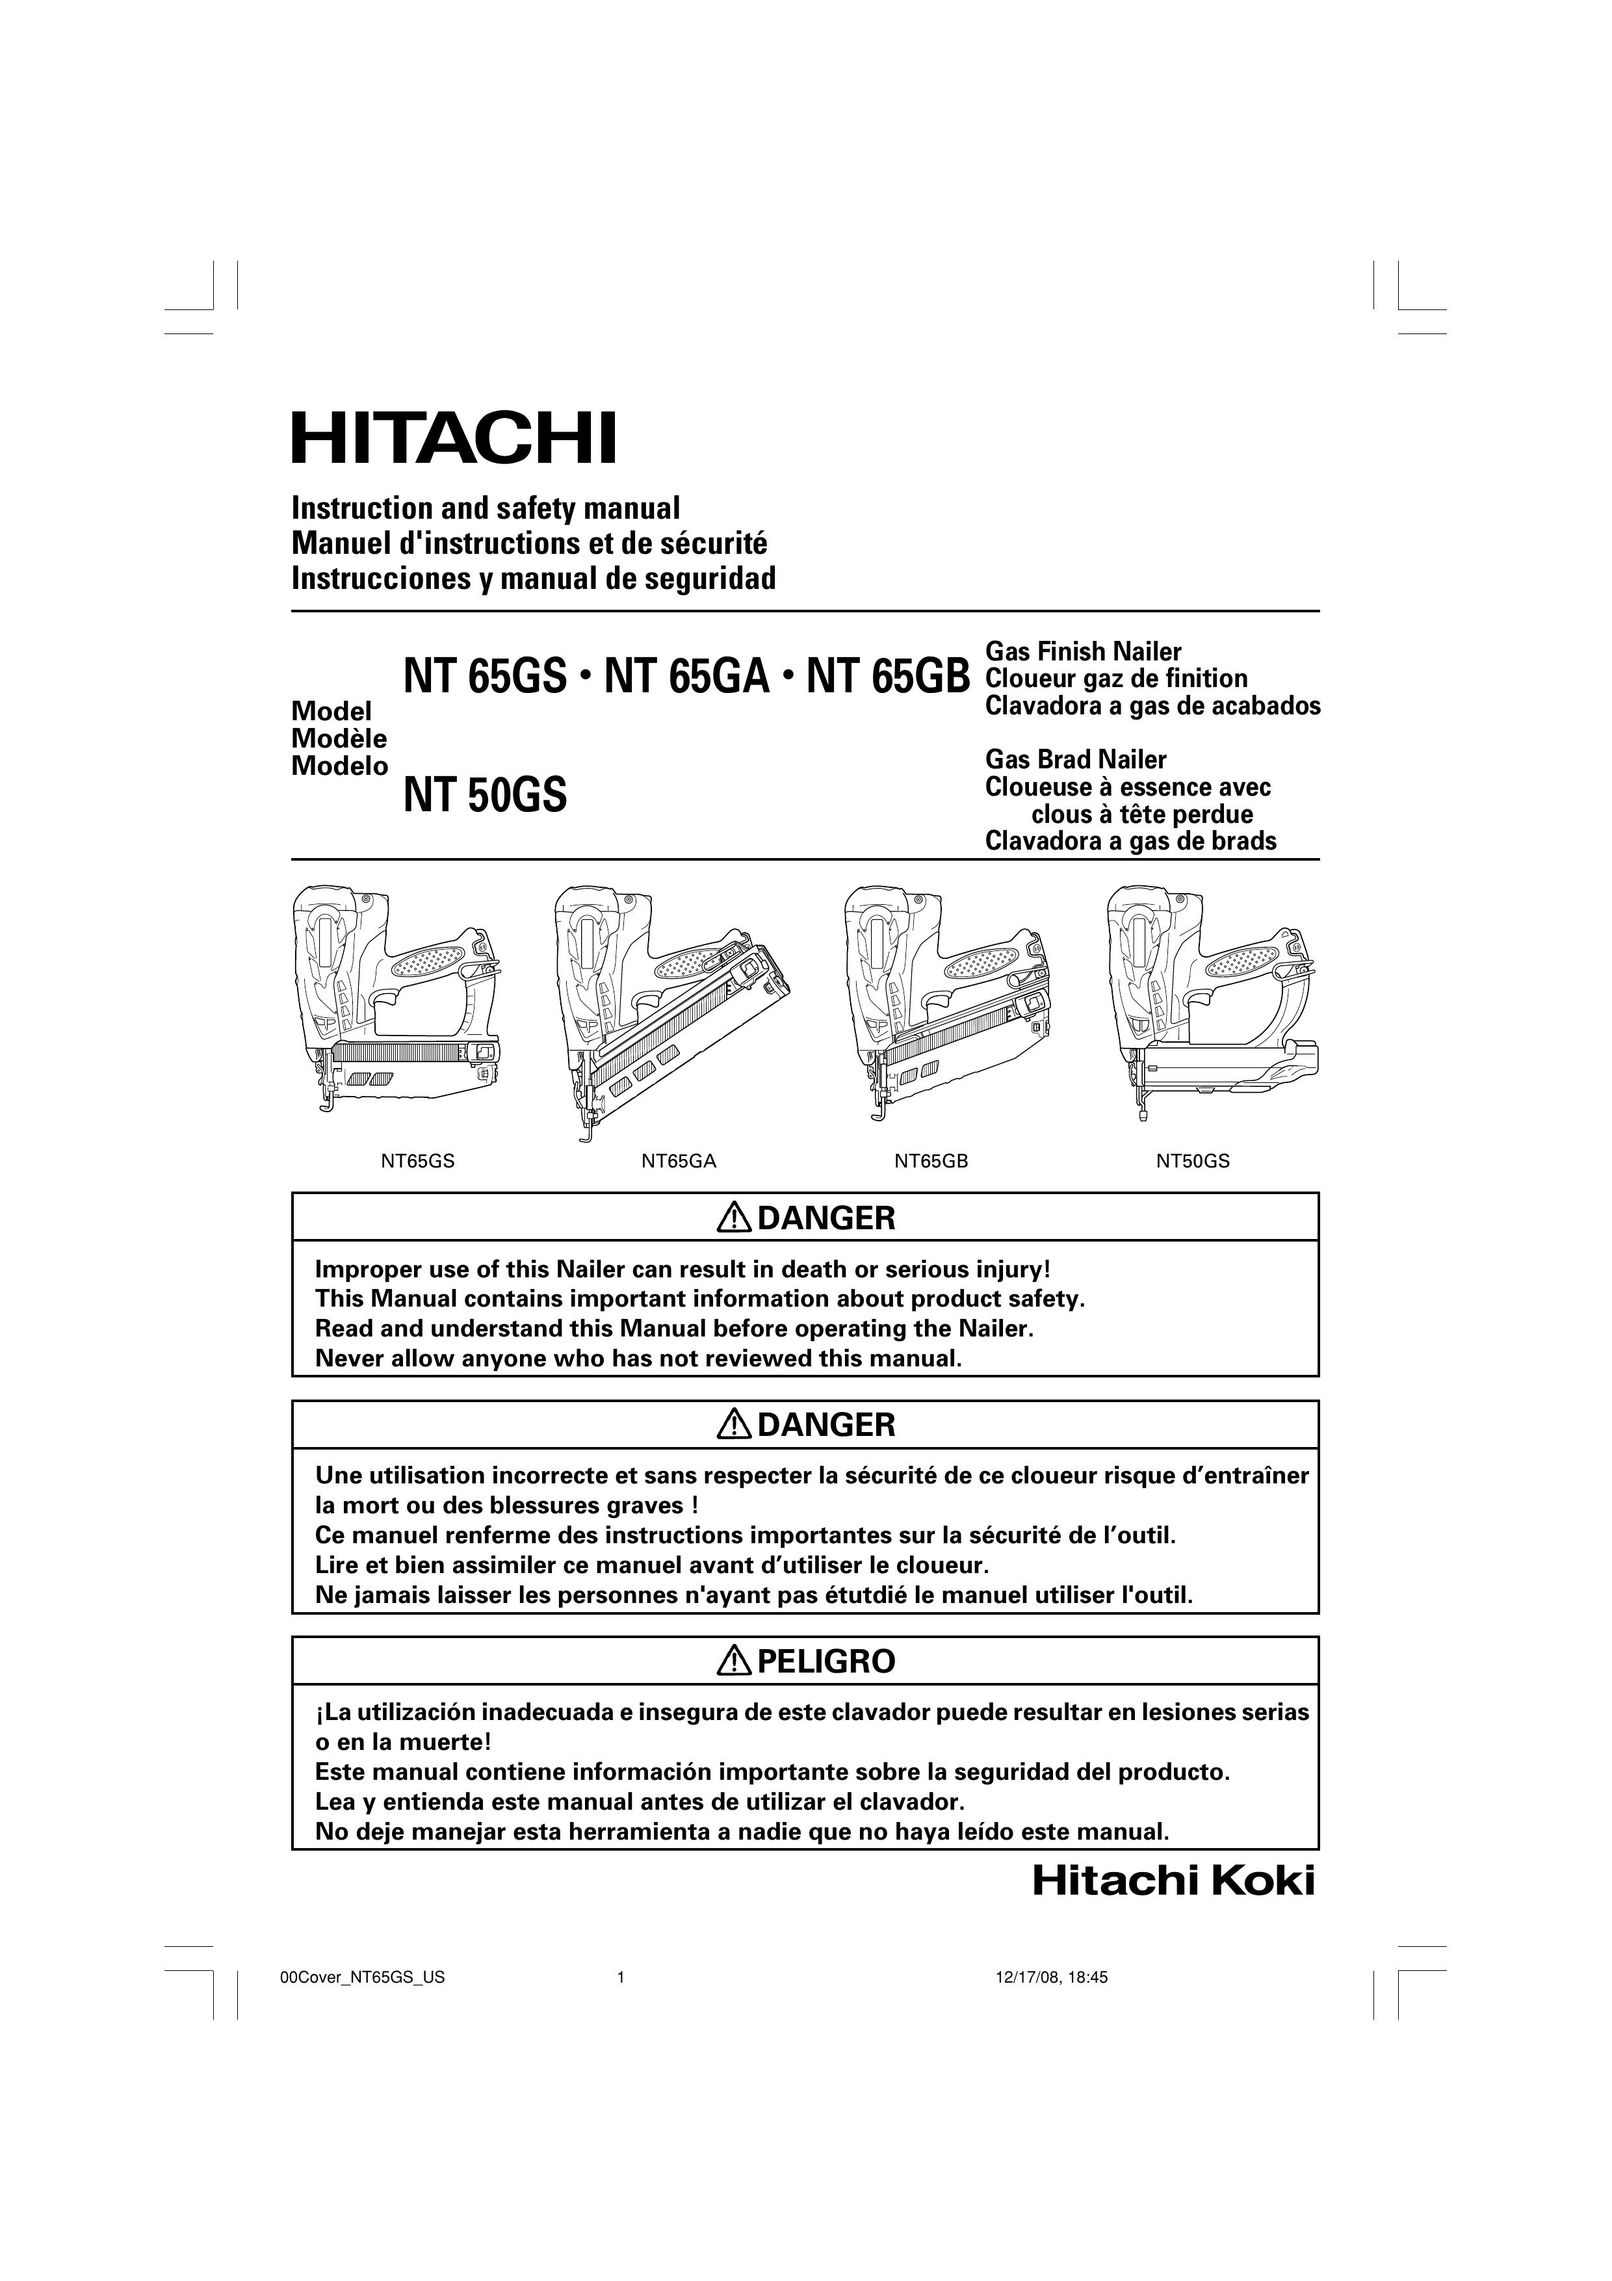 Hitachi NT 65GB Nail Gun User Manual